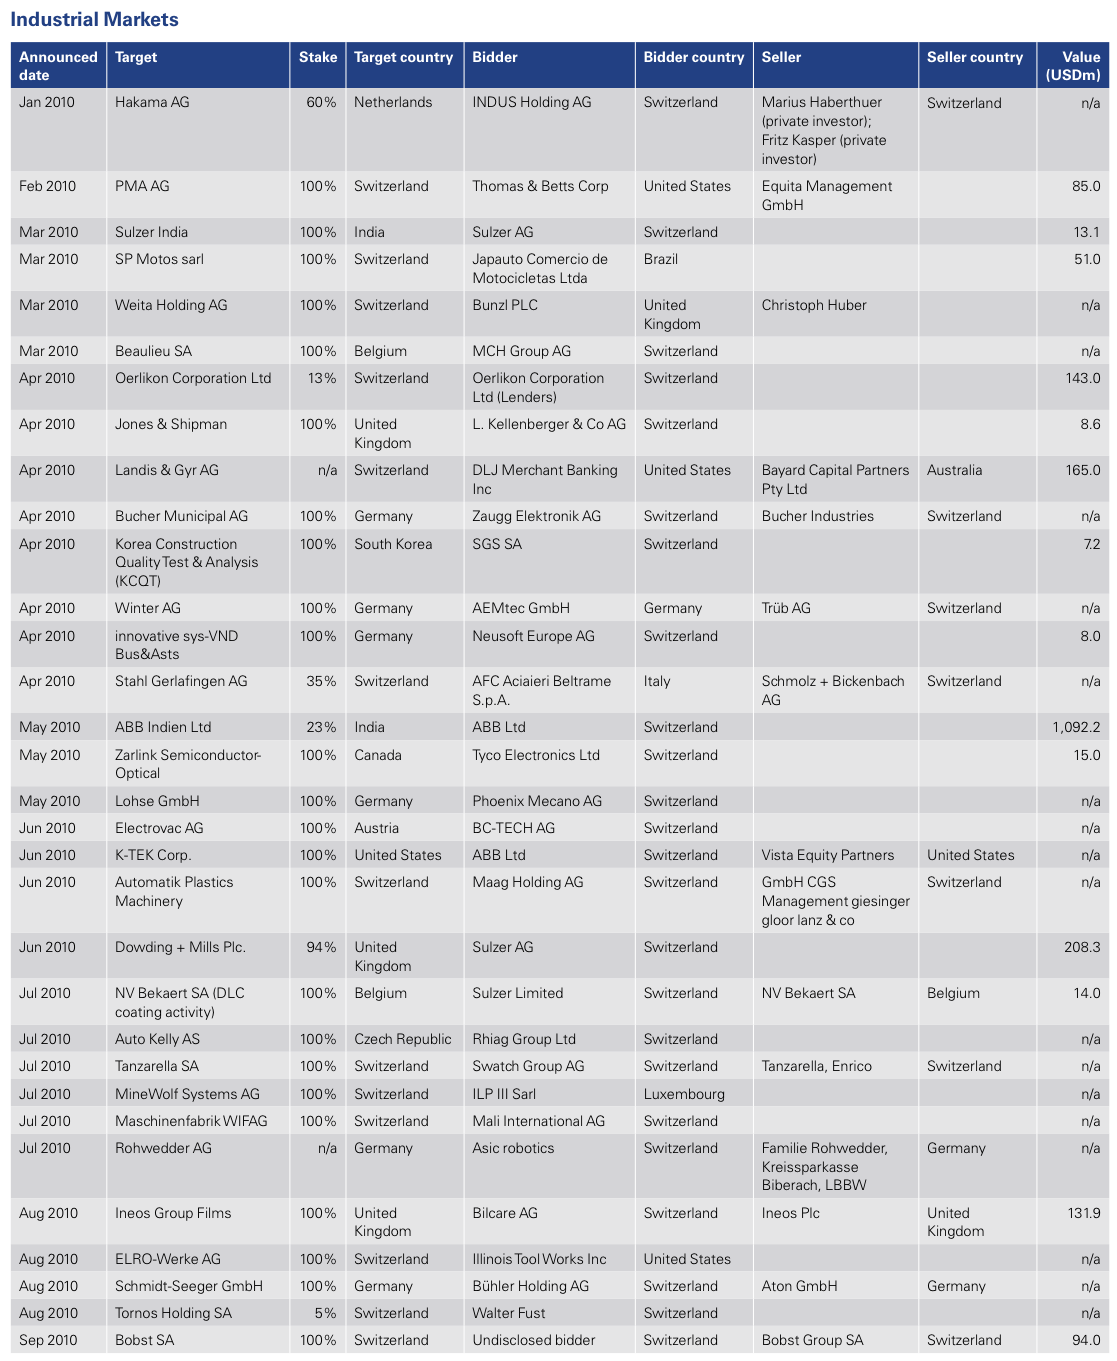 Figure 14: List of 2010 Swiss M&A Transactions